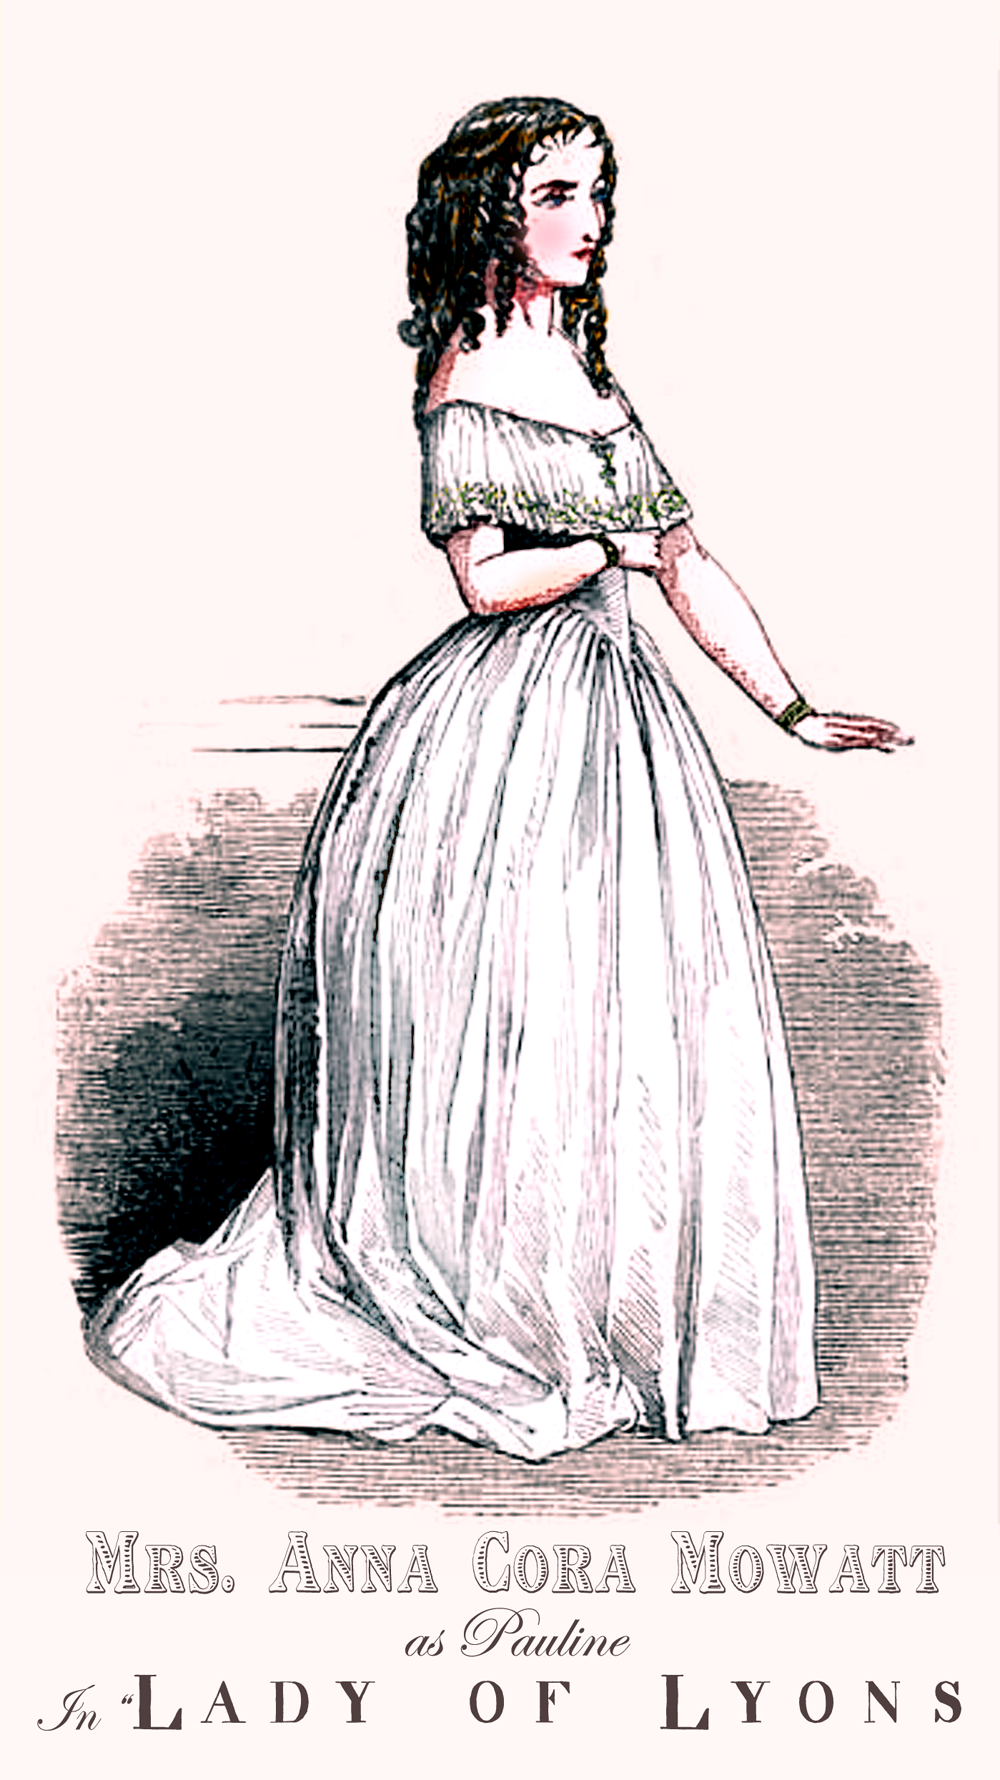 Anna Cora Mowatt as Pauline in "Lady of Lyons"